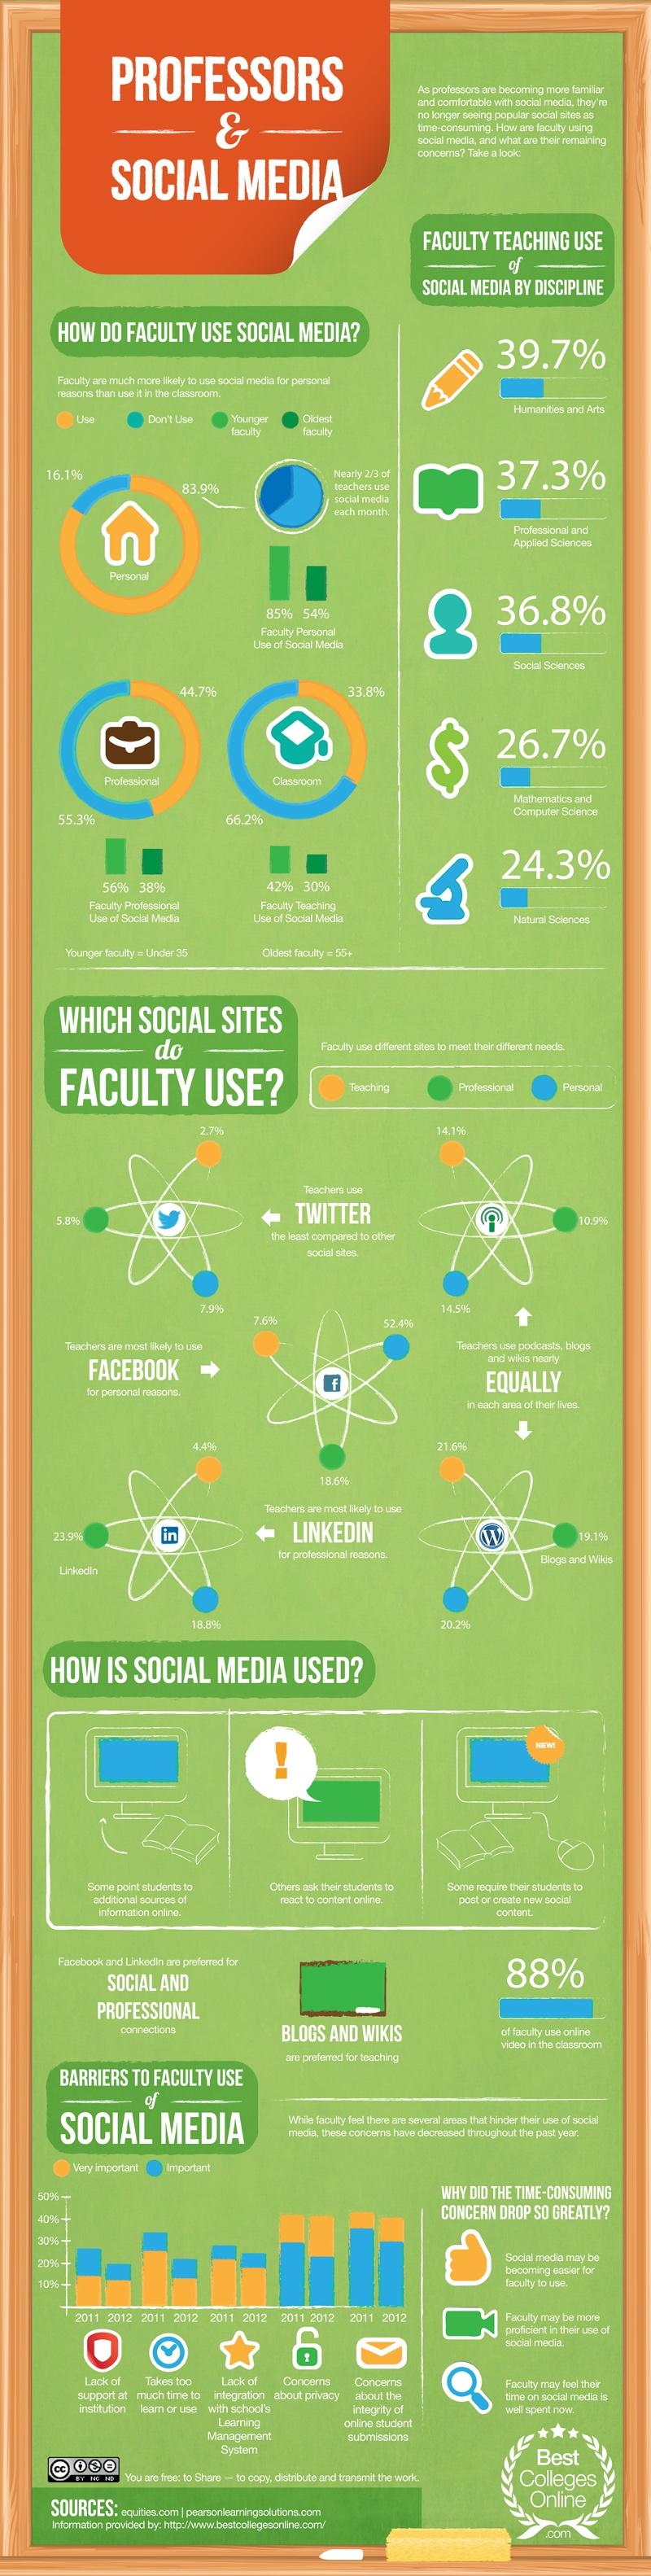 Professors-and-social-media-etr